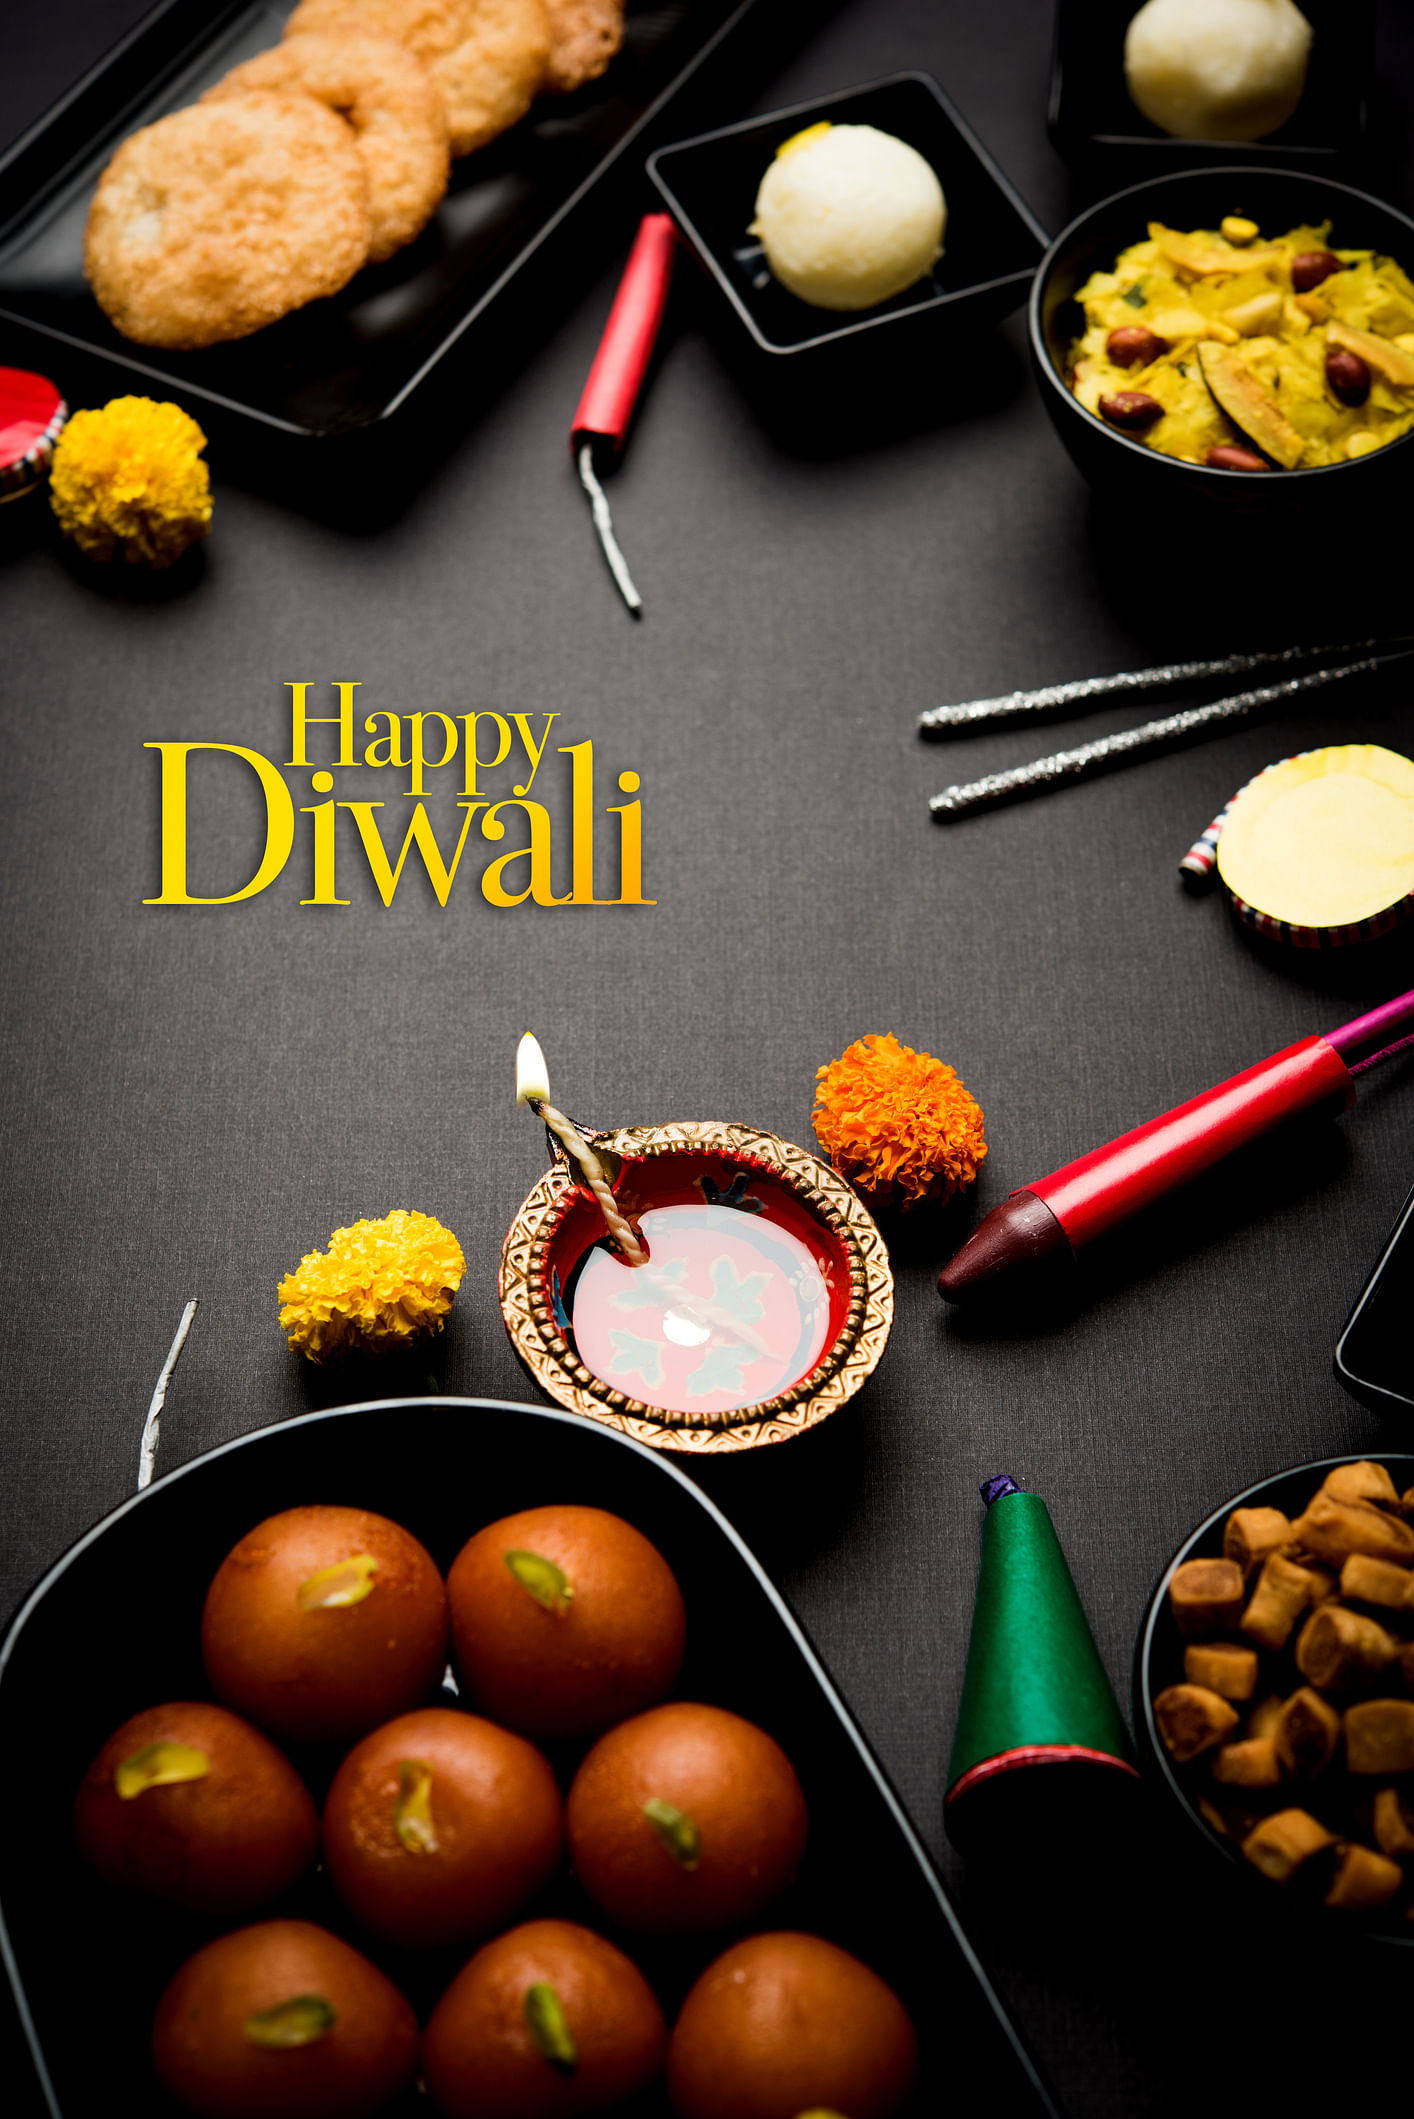 Happy Diwali 2020 Wishes: Images, Quotes, Status, & Greetings - Etandoz